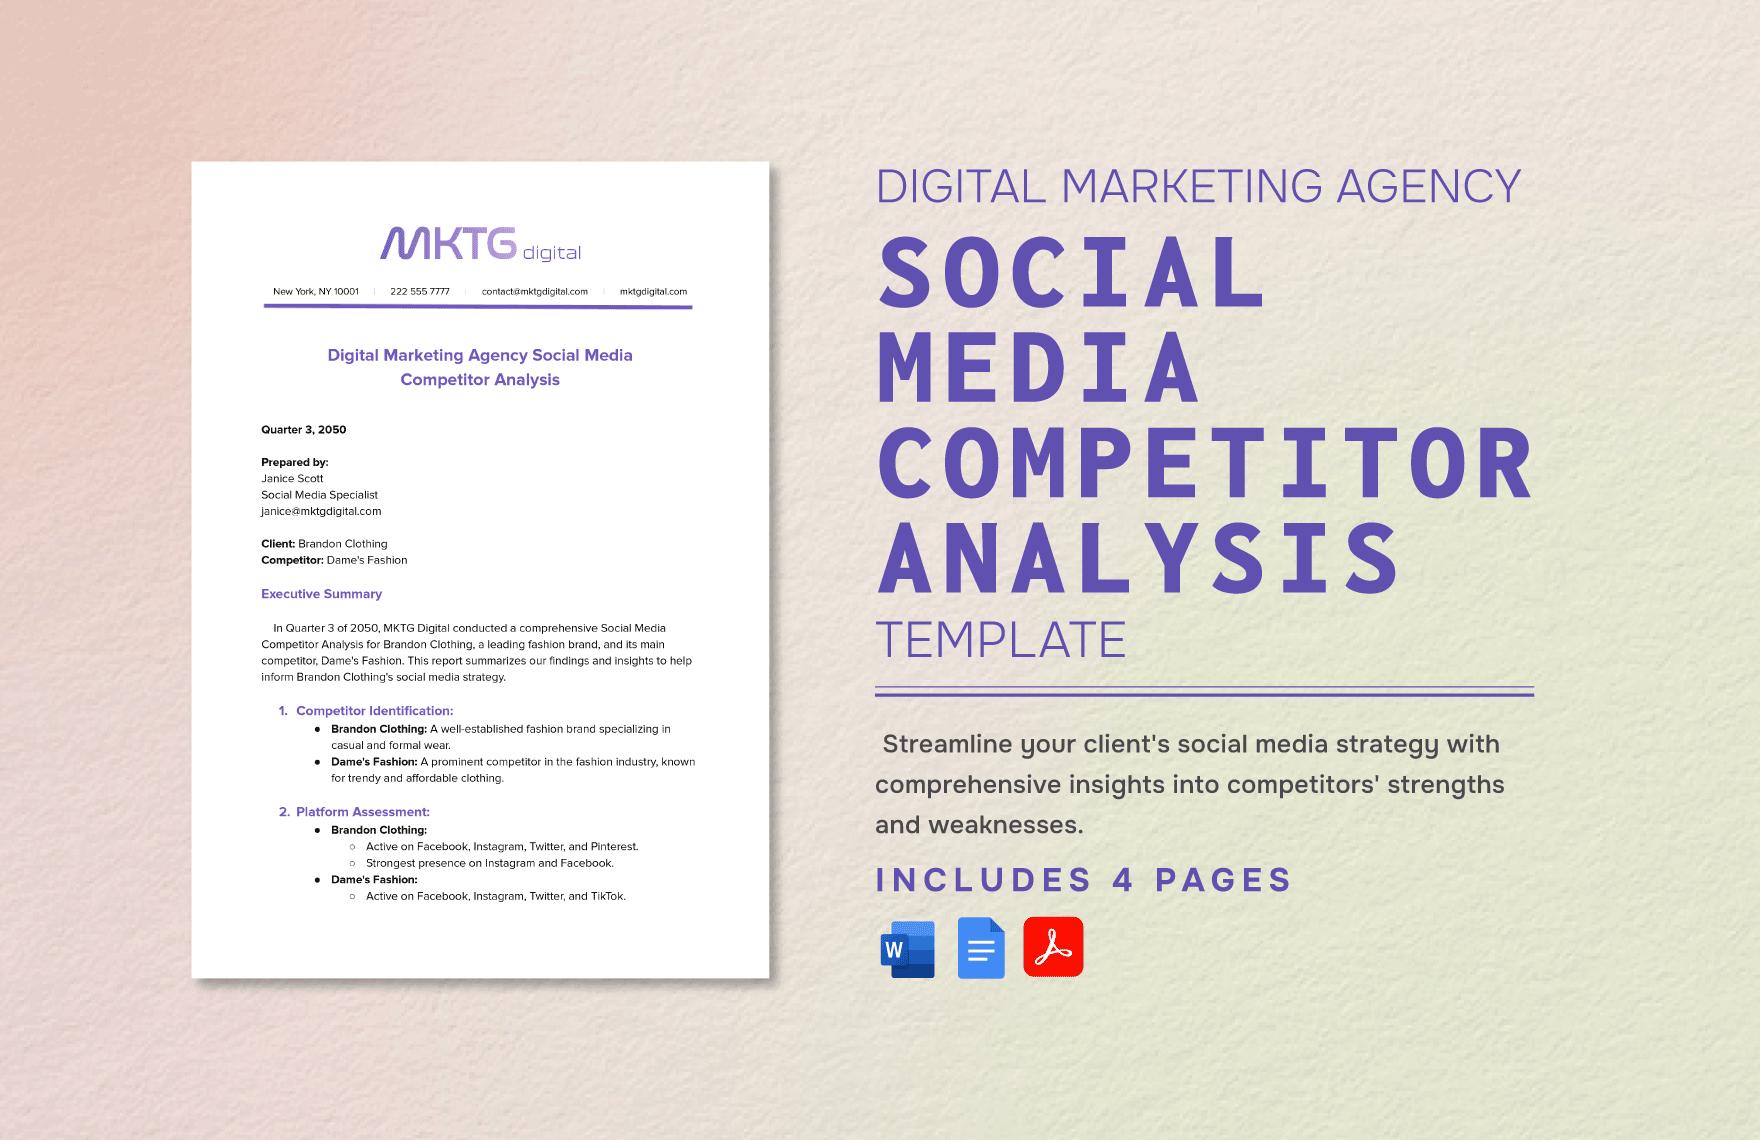 Digital Marketing Agency Social Media Competitor Analysis Template